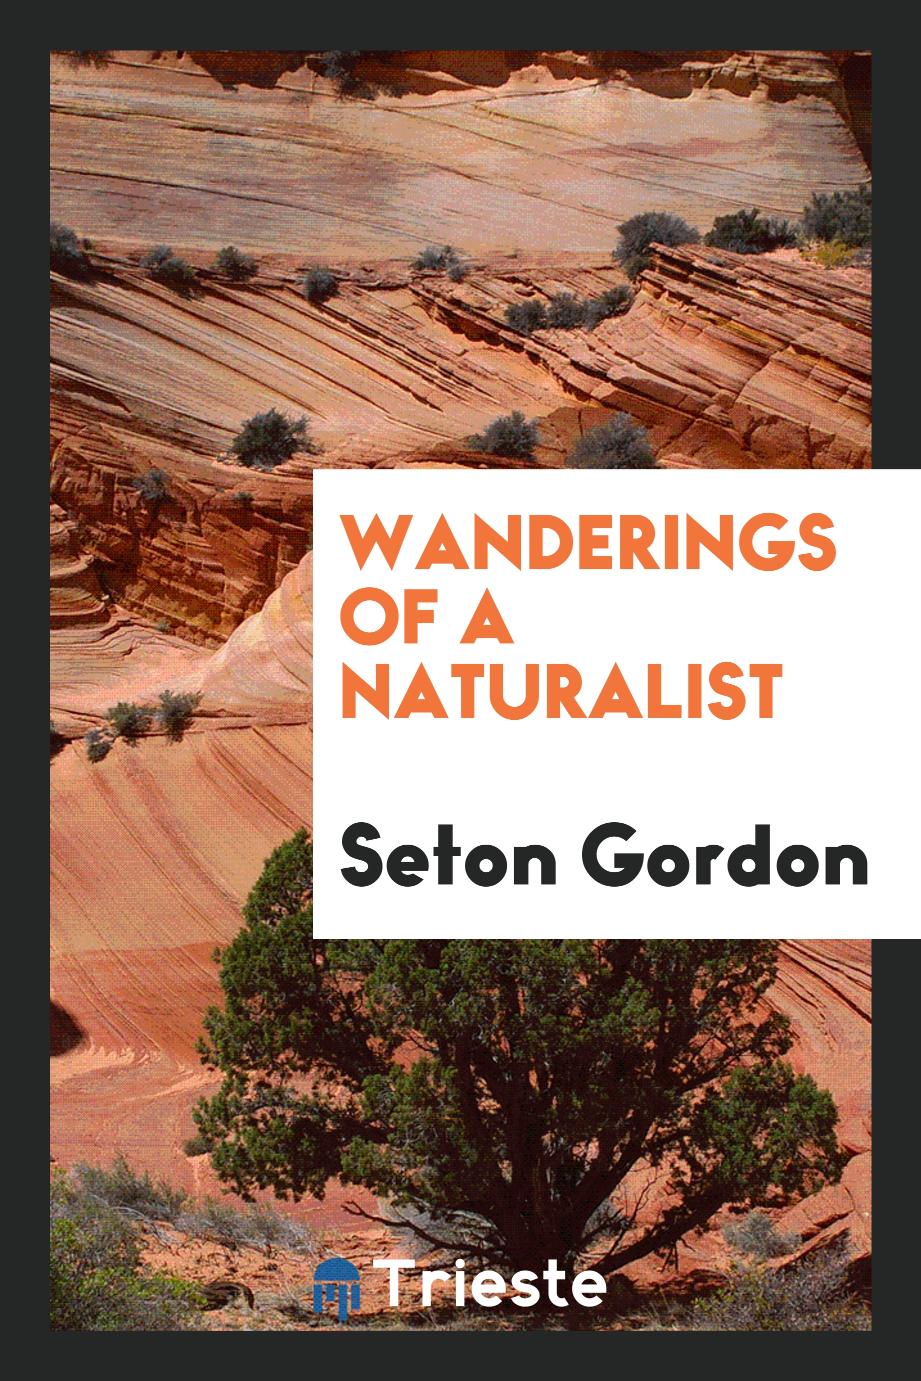 Wanderings of a naturalist